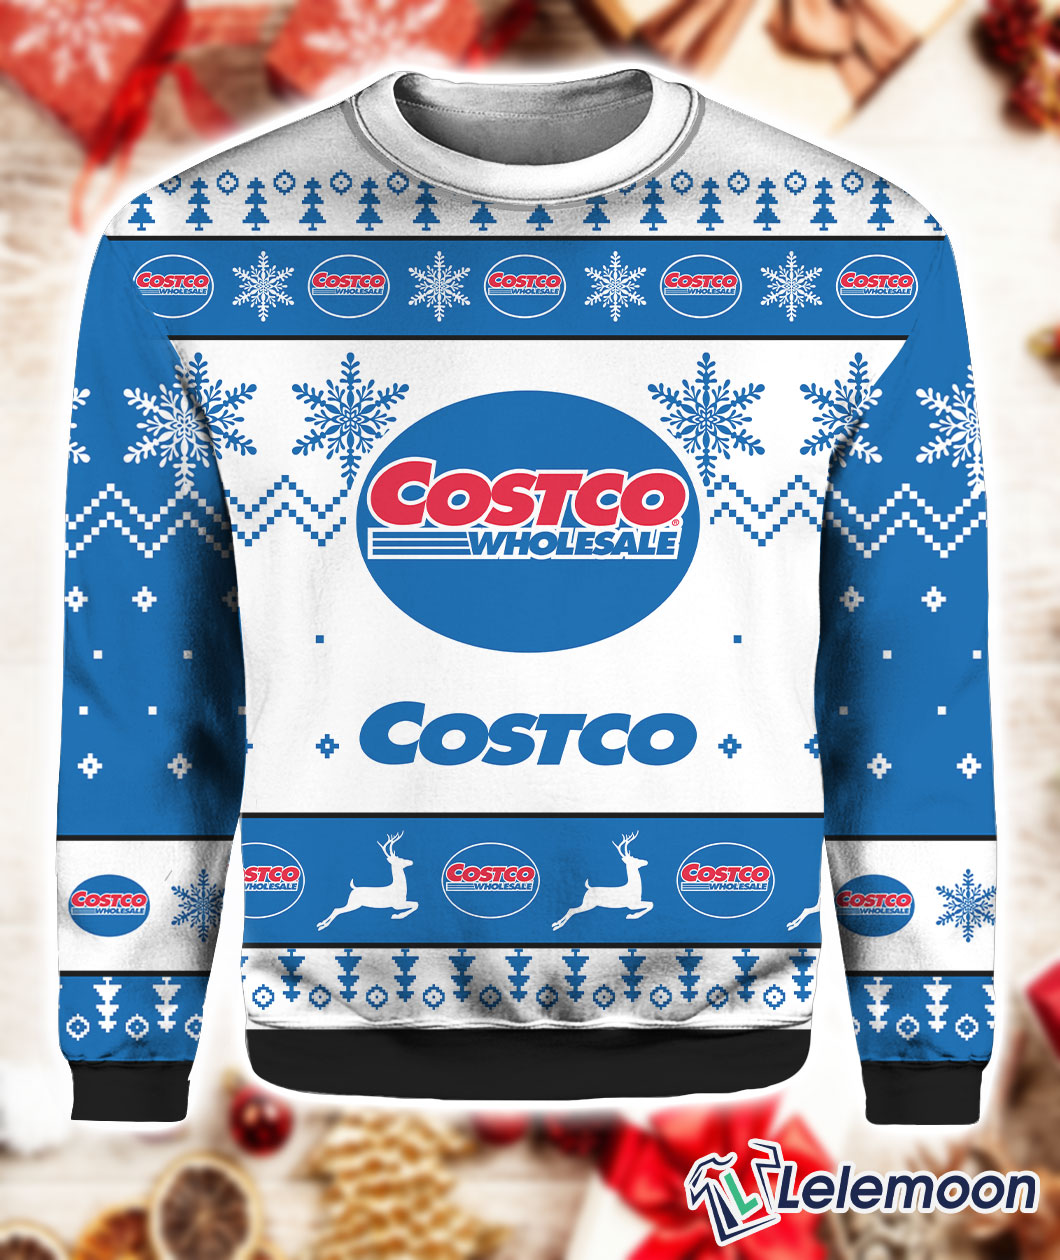 Costco Christmas Sweater - Lelemoon